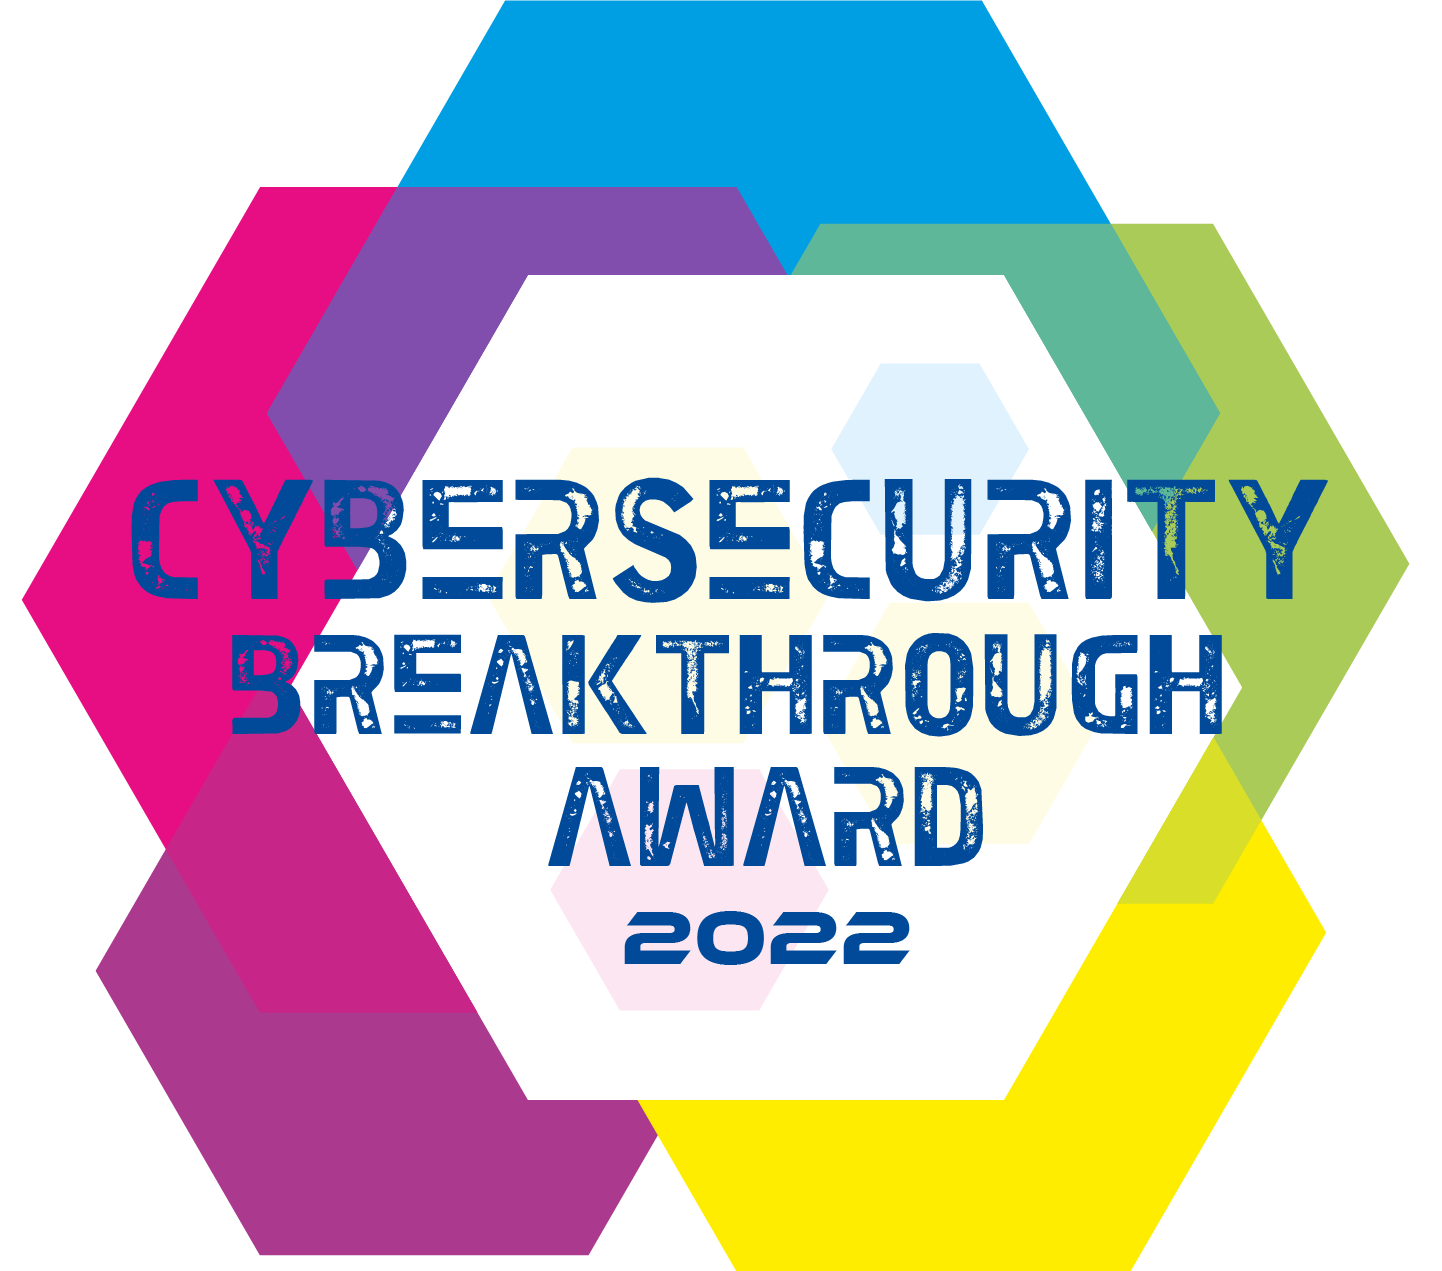 Cybersecurity Breakthrough Award Badge 2022